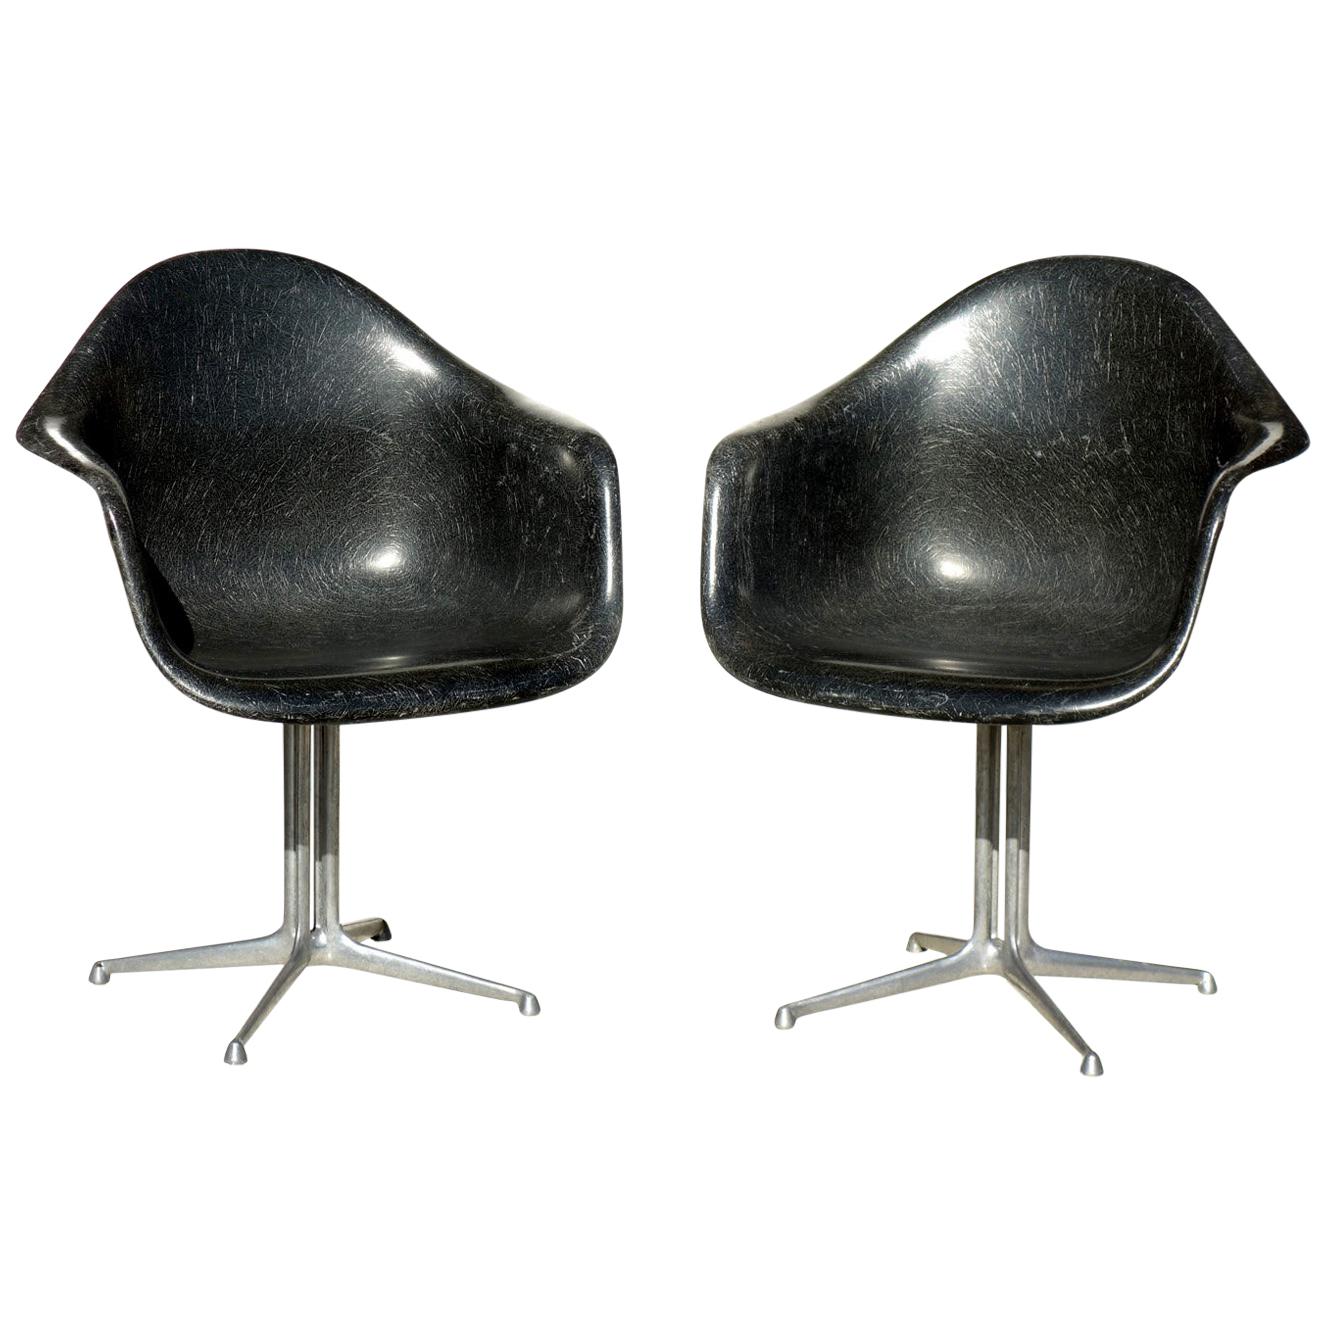 "La Fonda" C. Eames by H. Miller Space Age Design Fiberglass Shell Two Chair For Sale